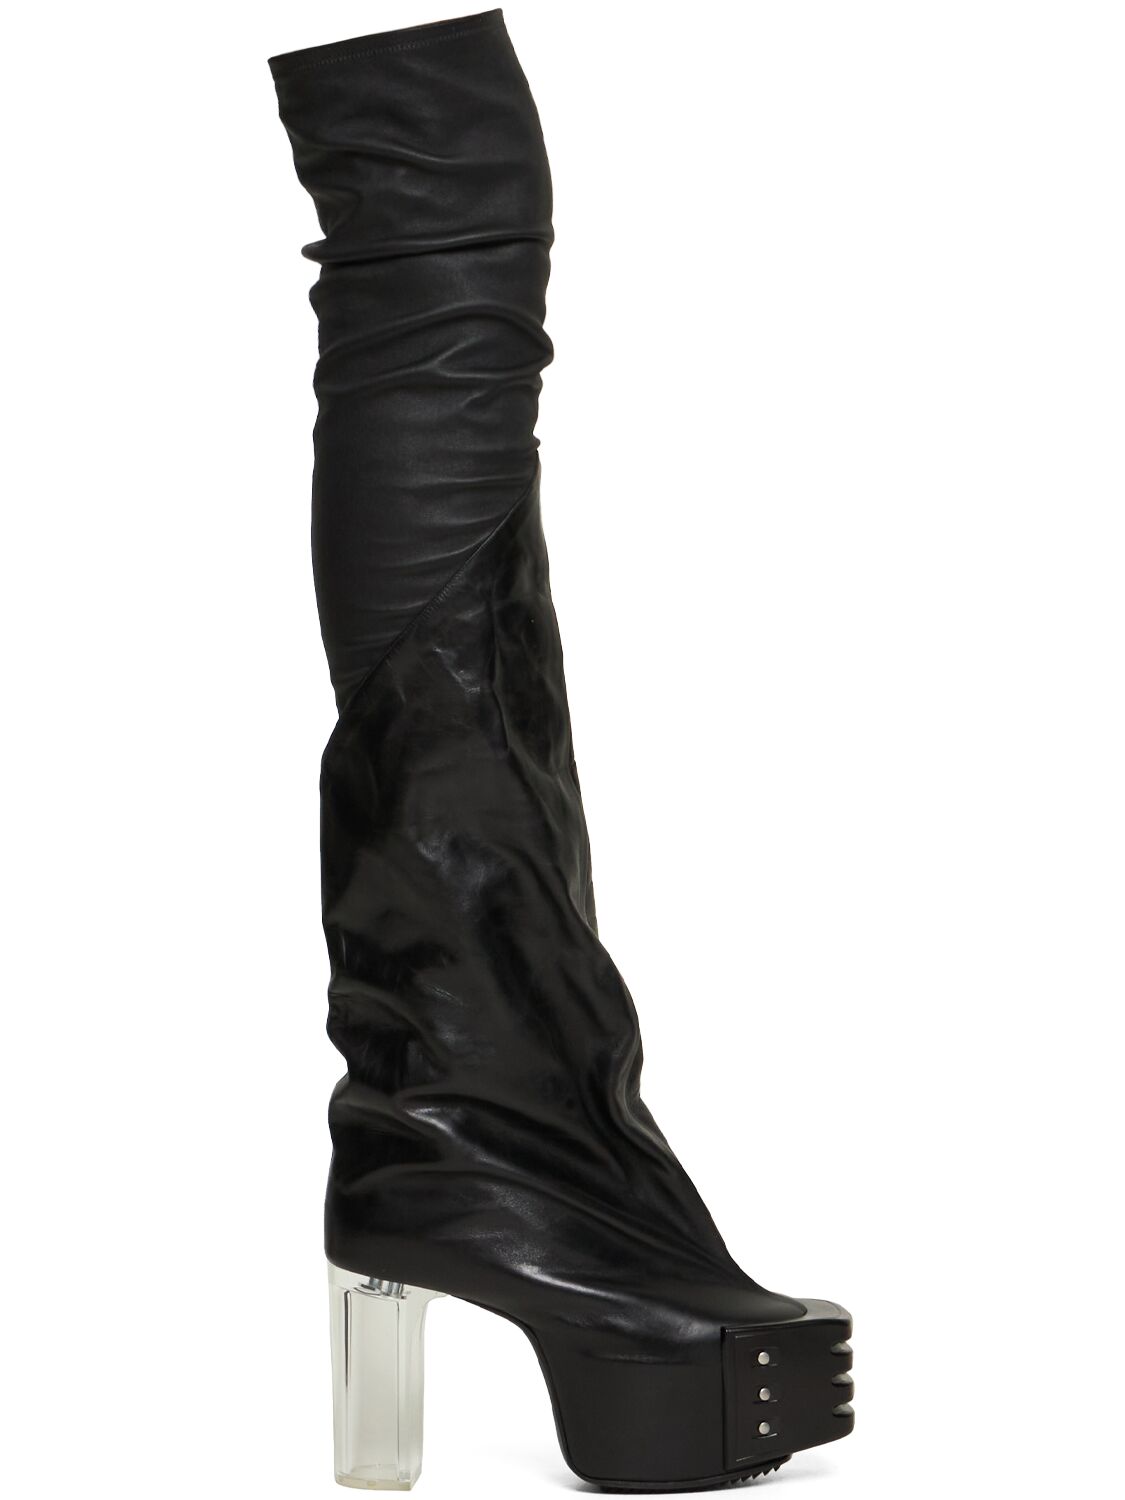 Image of Beatle Bogun Leather Boots